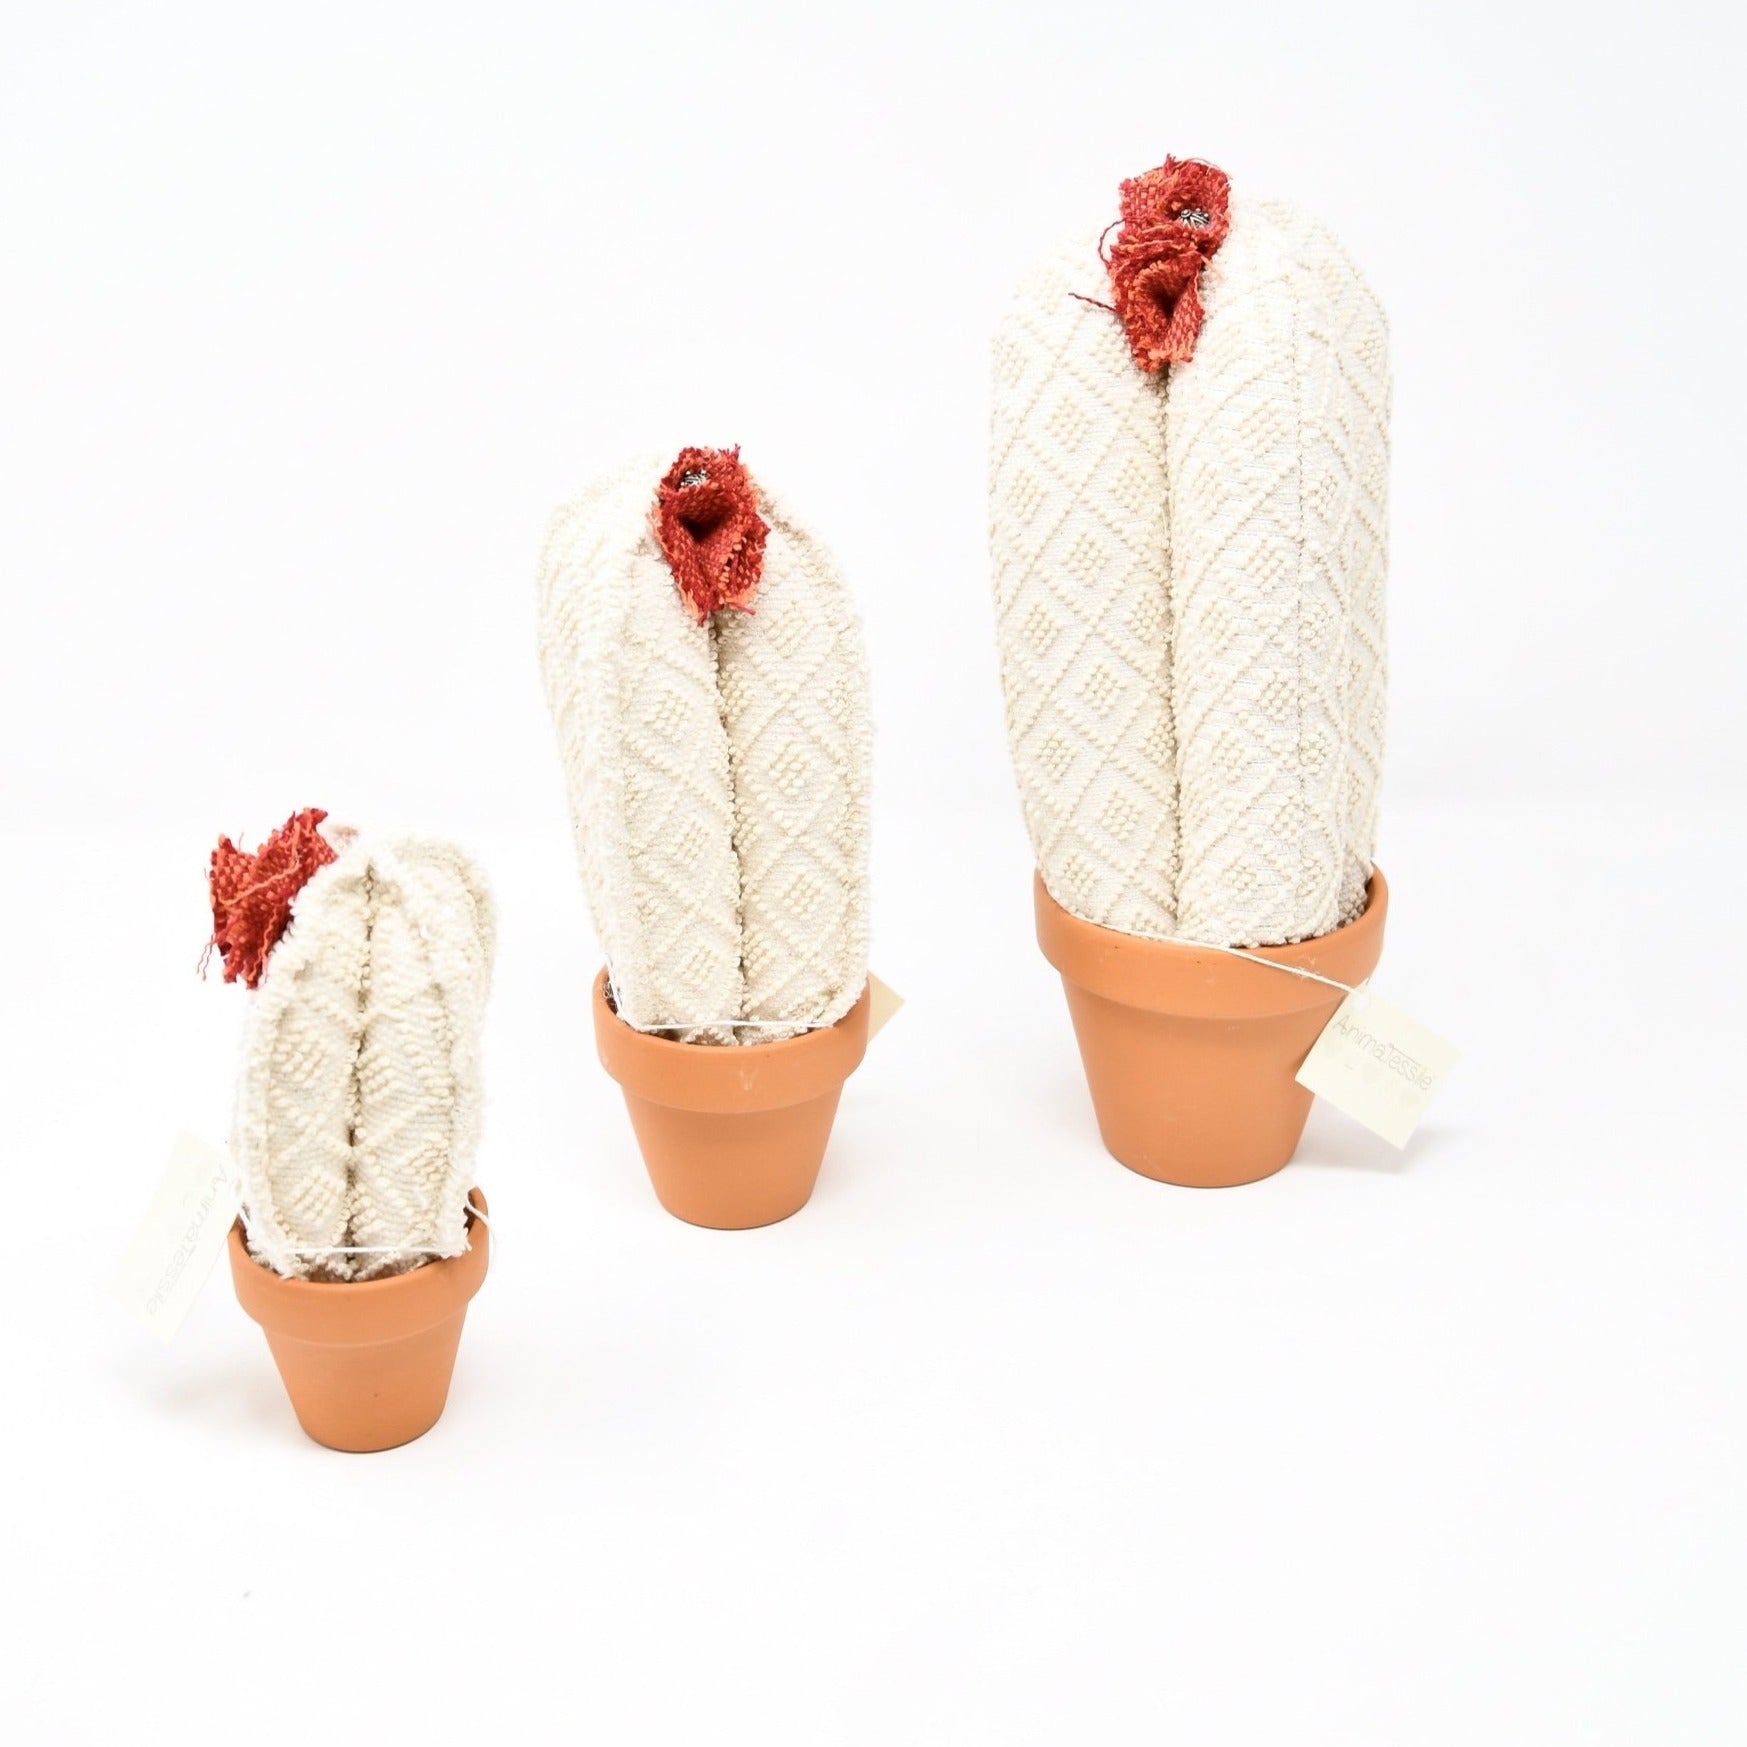 Cactus in tessuto panna